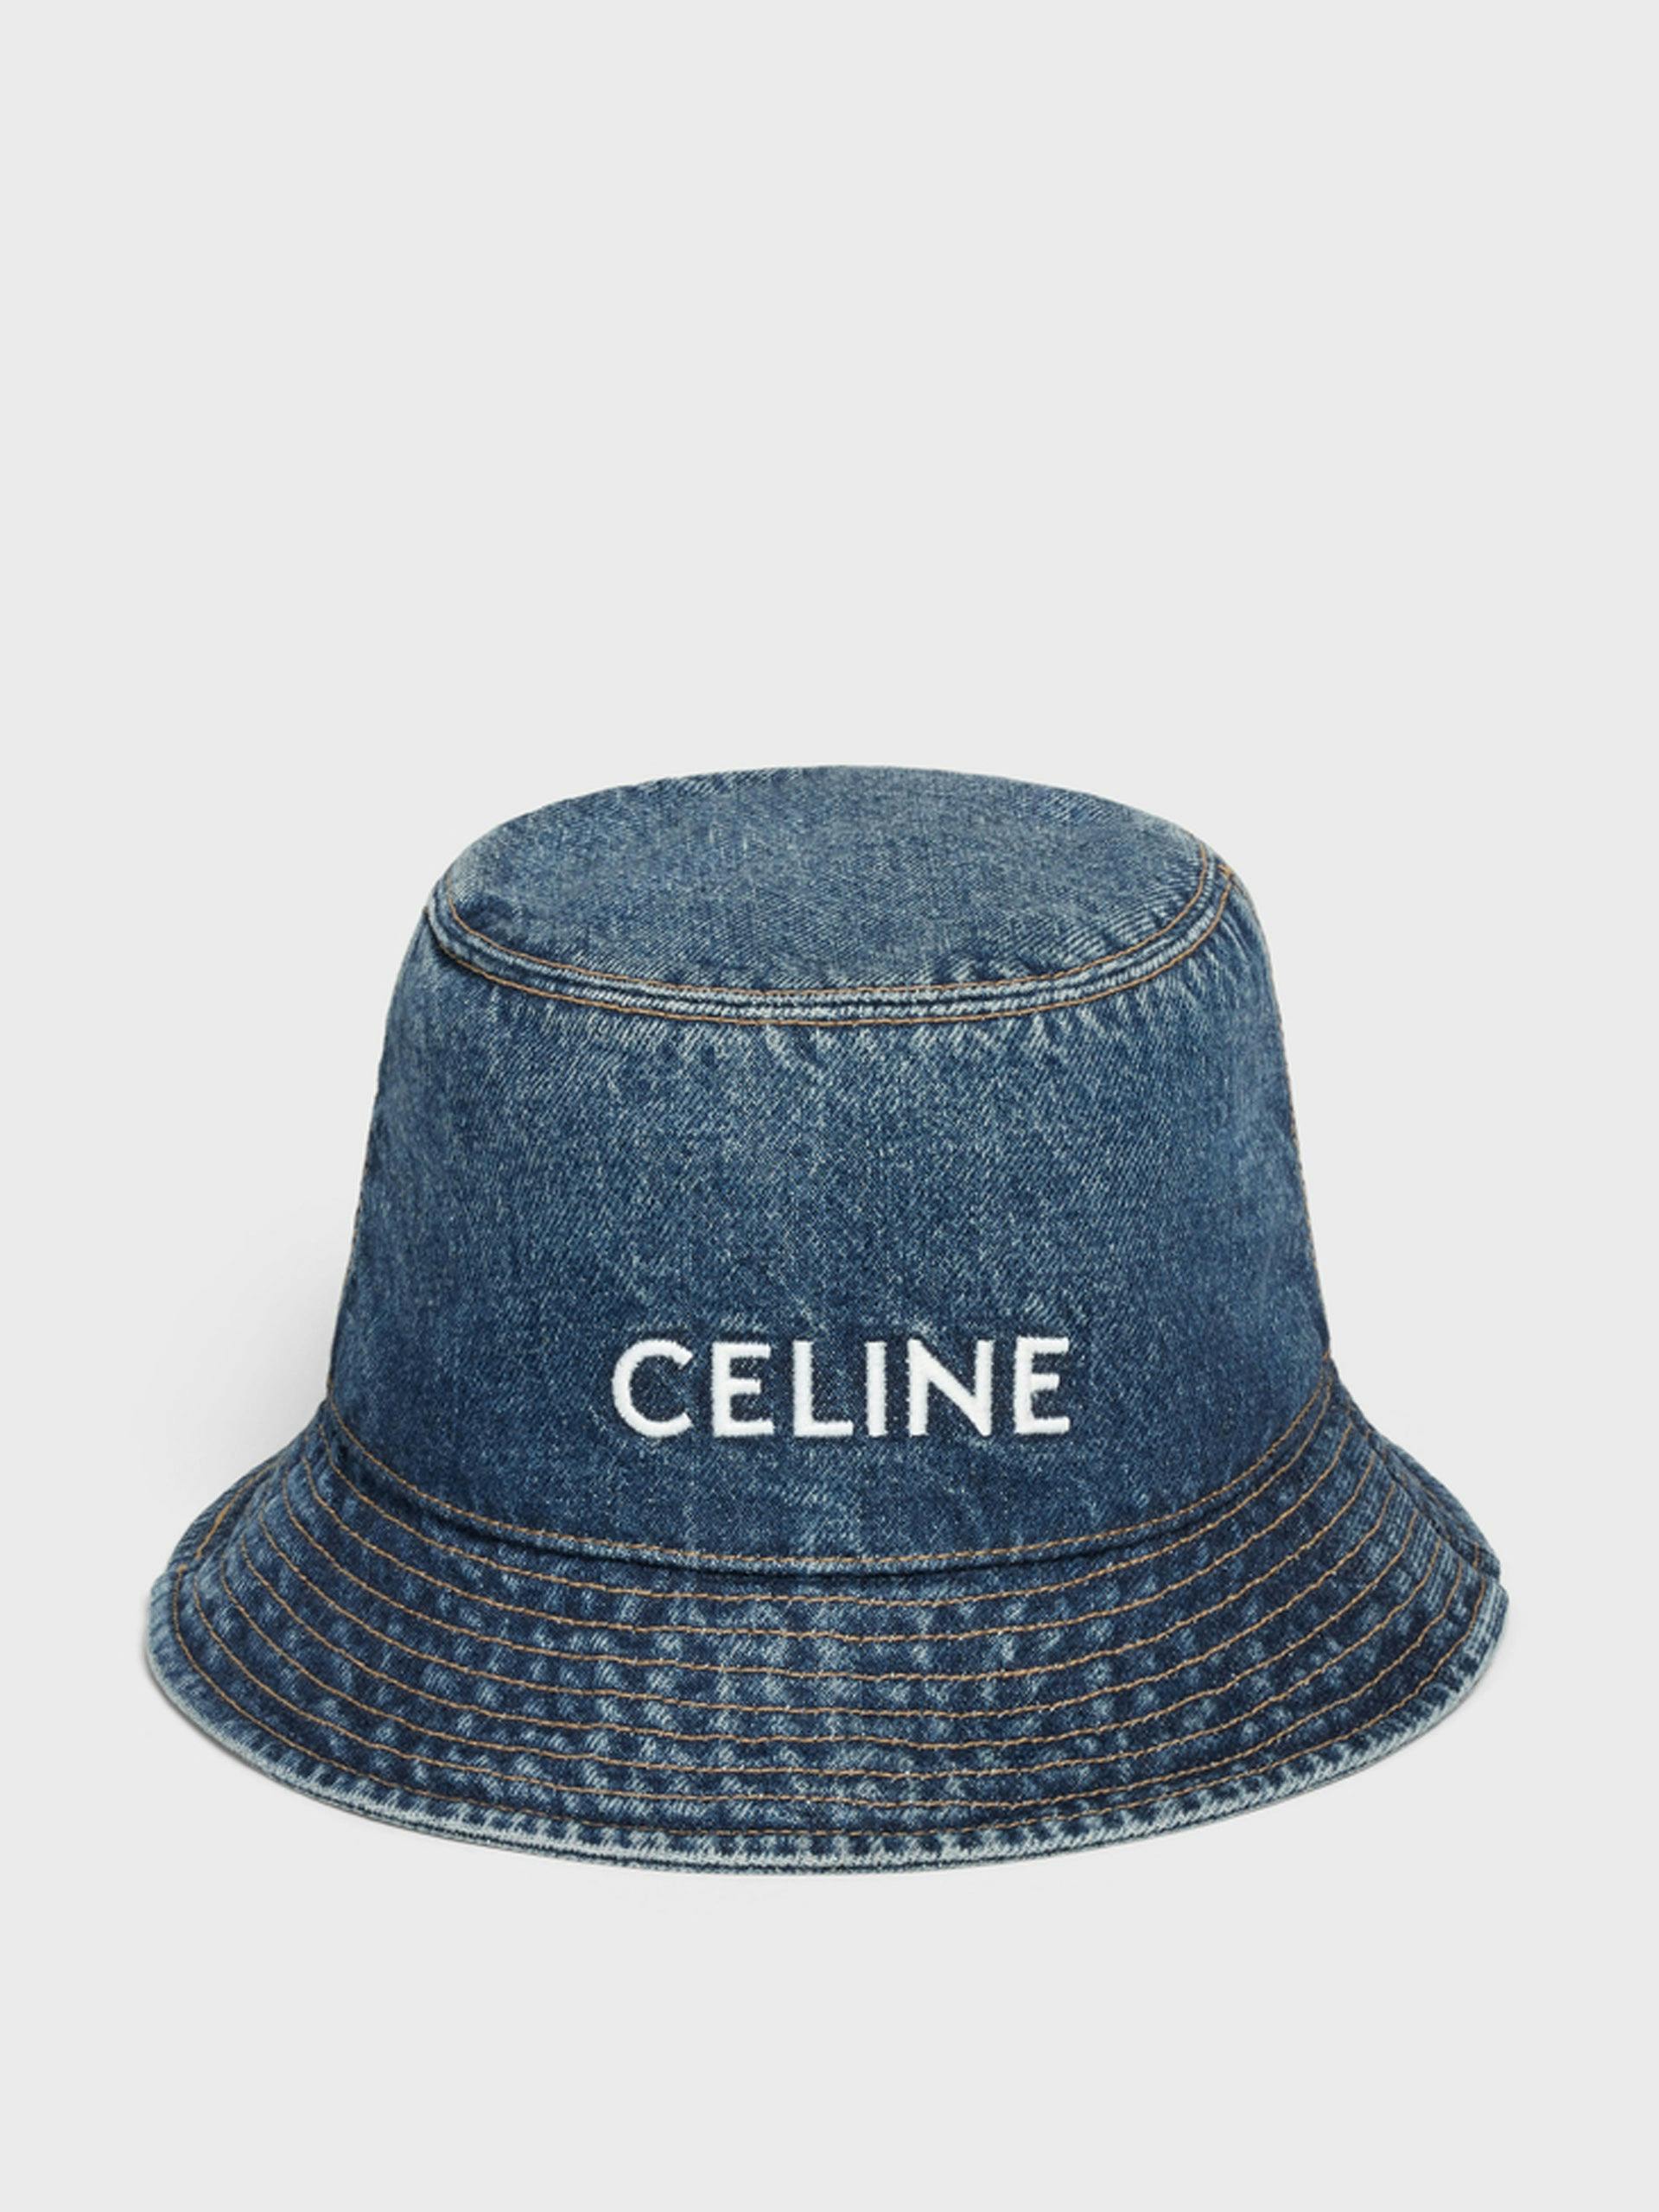 Celine embroidery union wash denim bucket hat